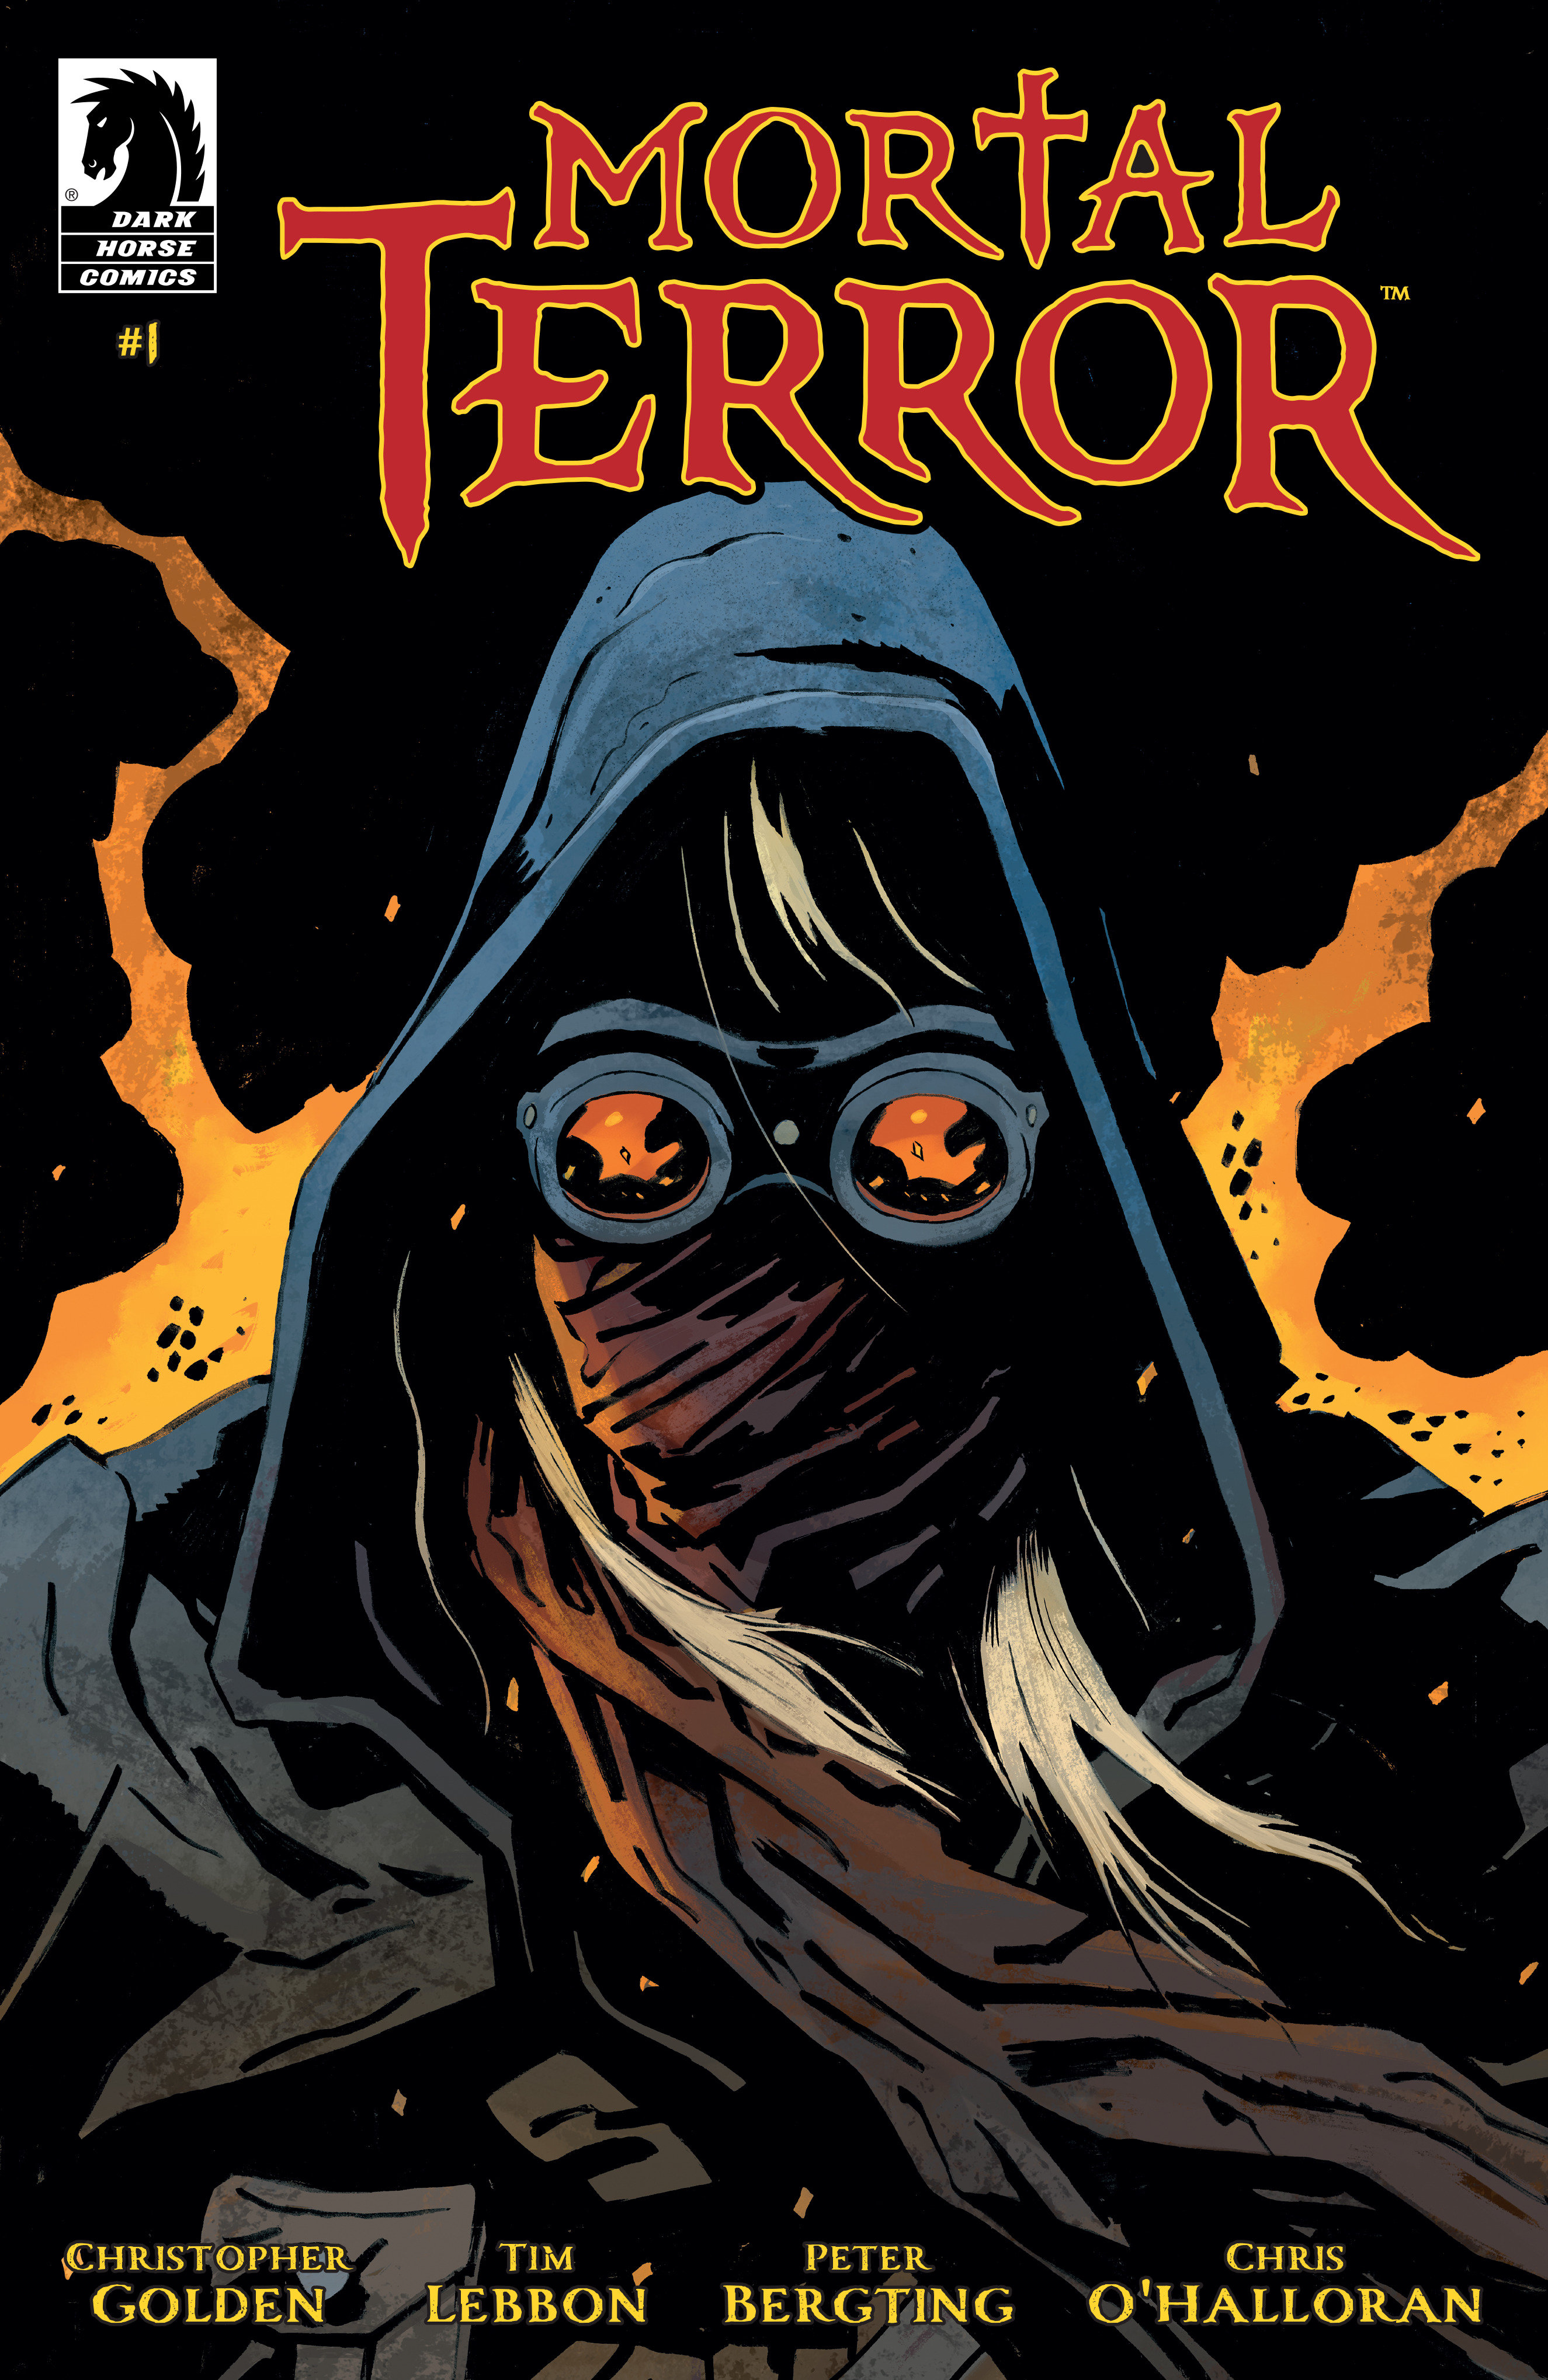 Mortal Terror #1 Cover A (Peter Bergting)